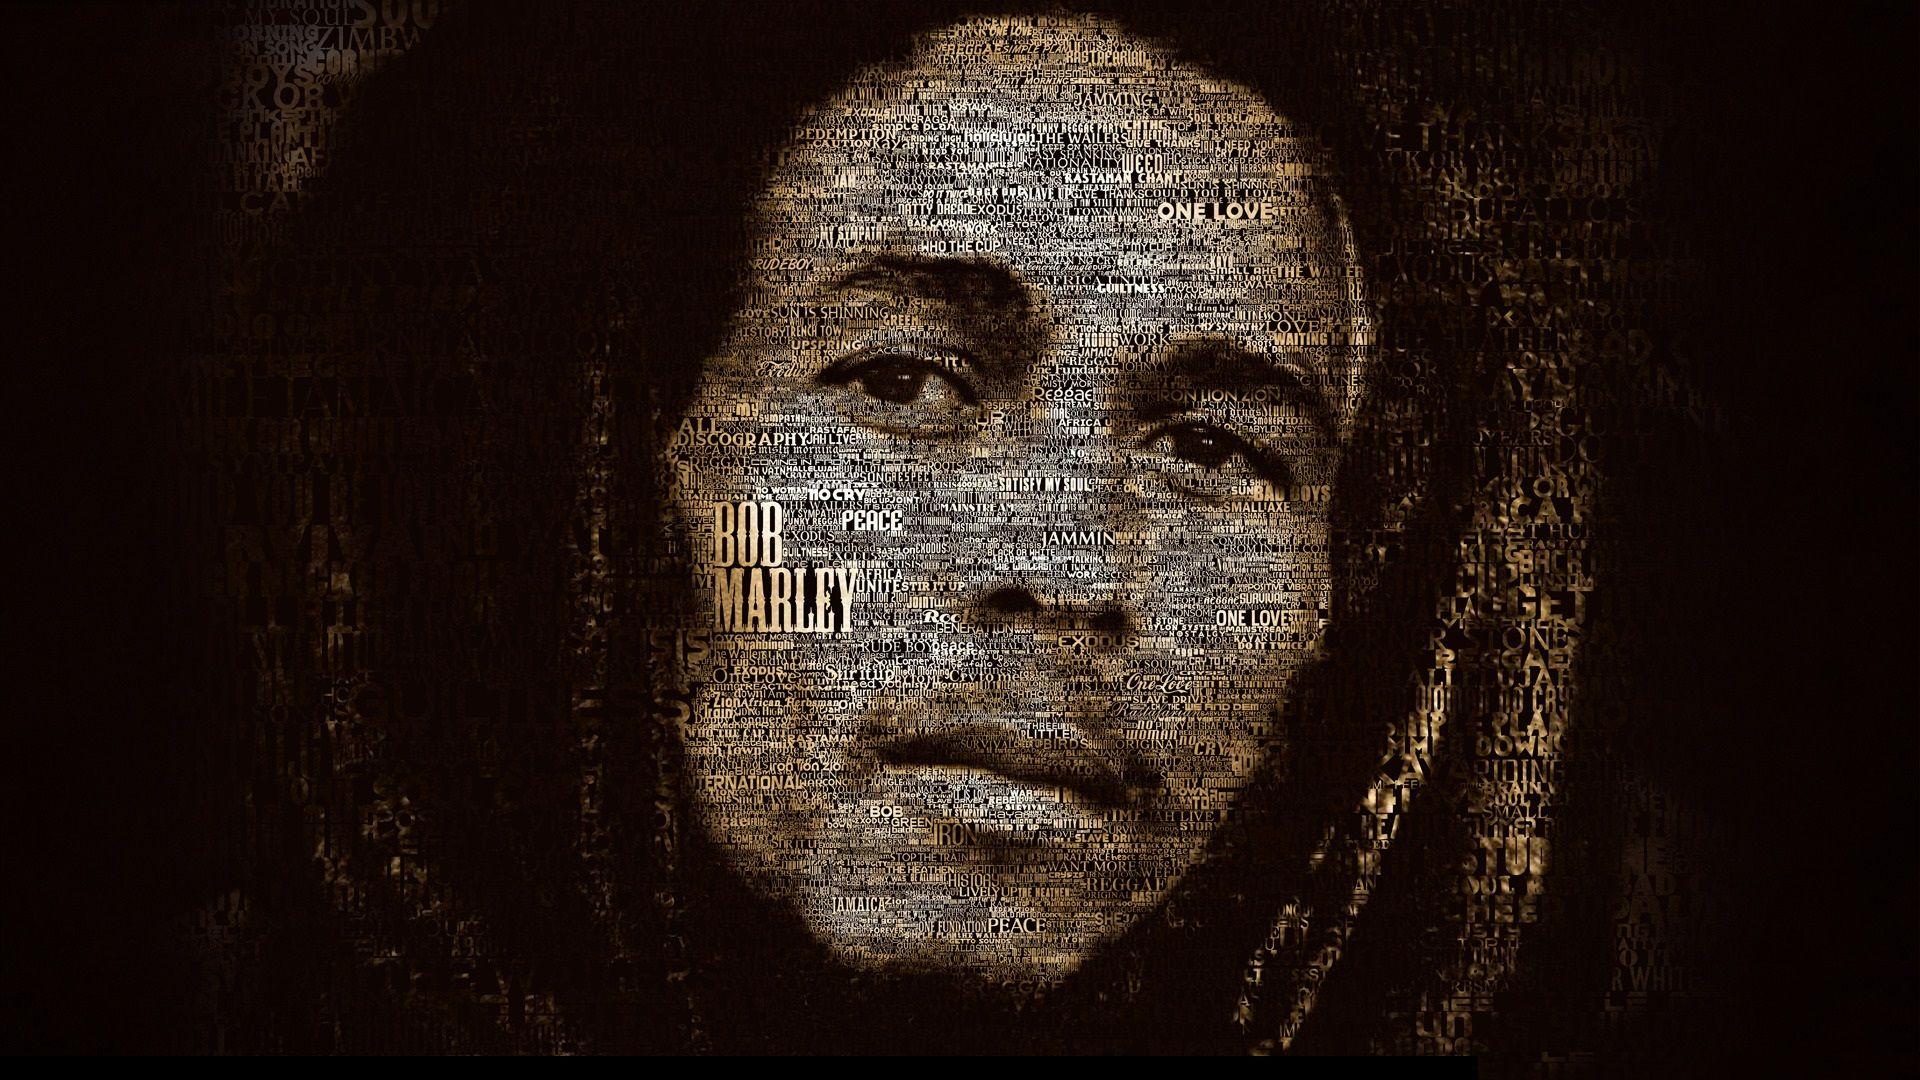 Wallpaper.wiki Bob Marley Full Hd Wallpaper Download Famous